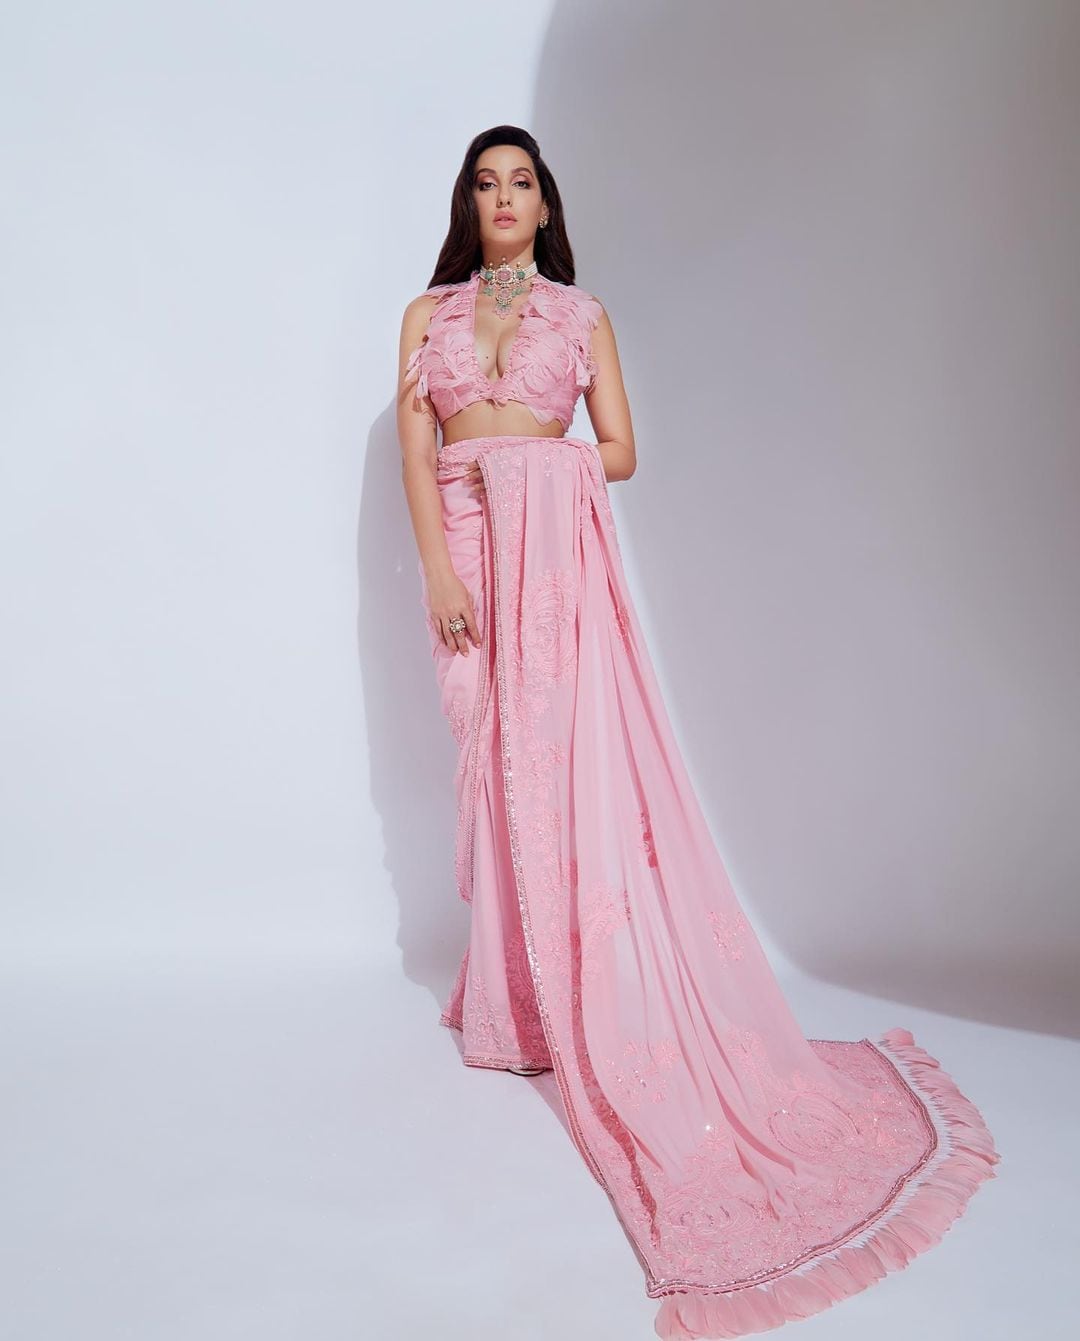 Nora Fatehi is acing summer fashion in a pastel pink saree